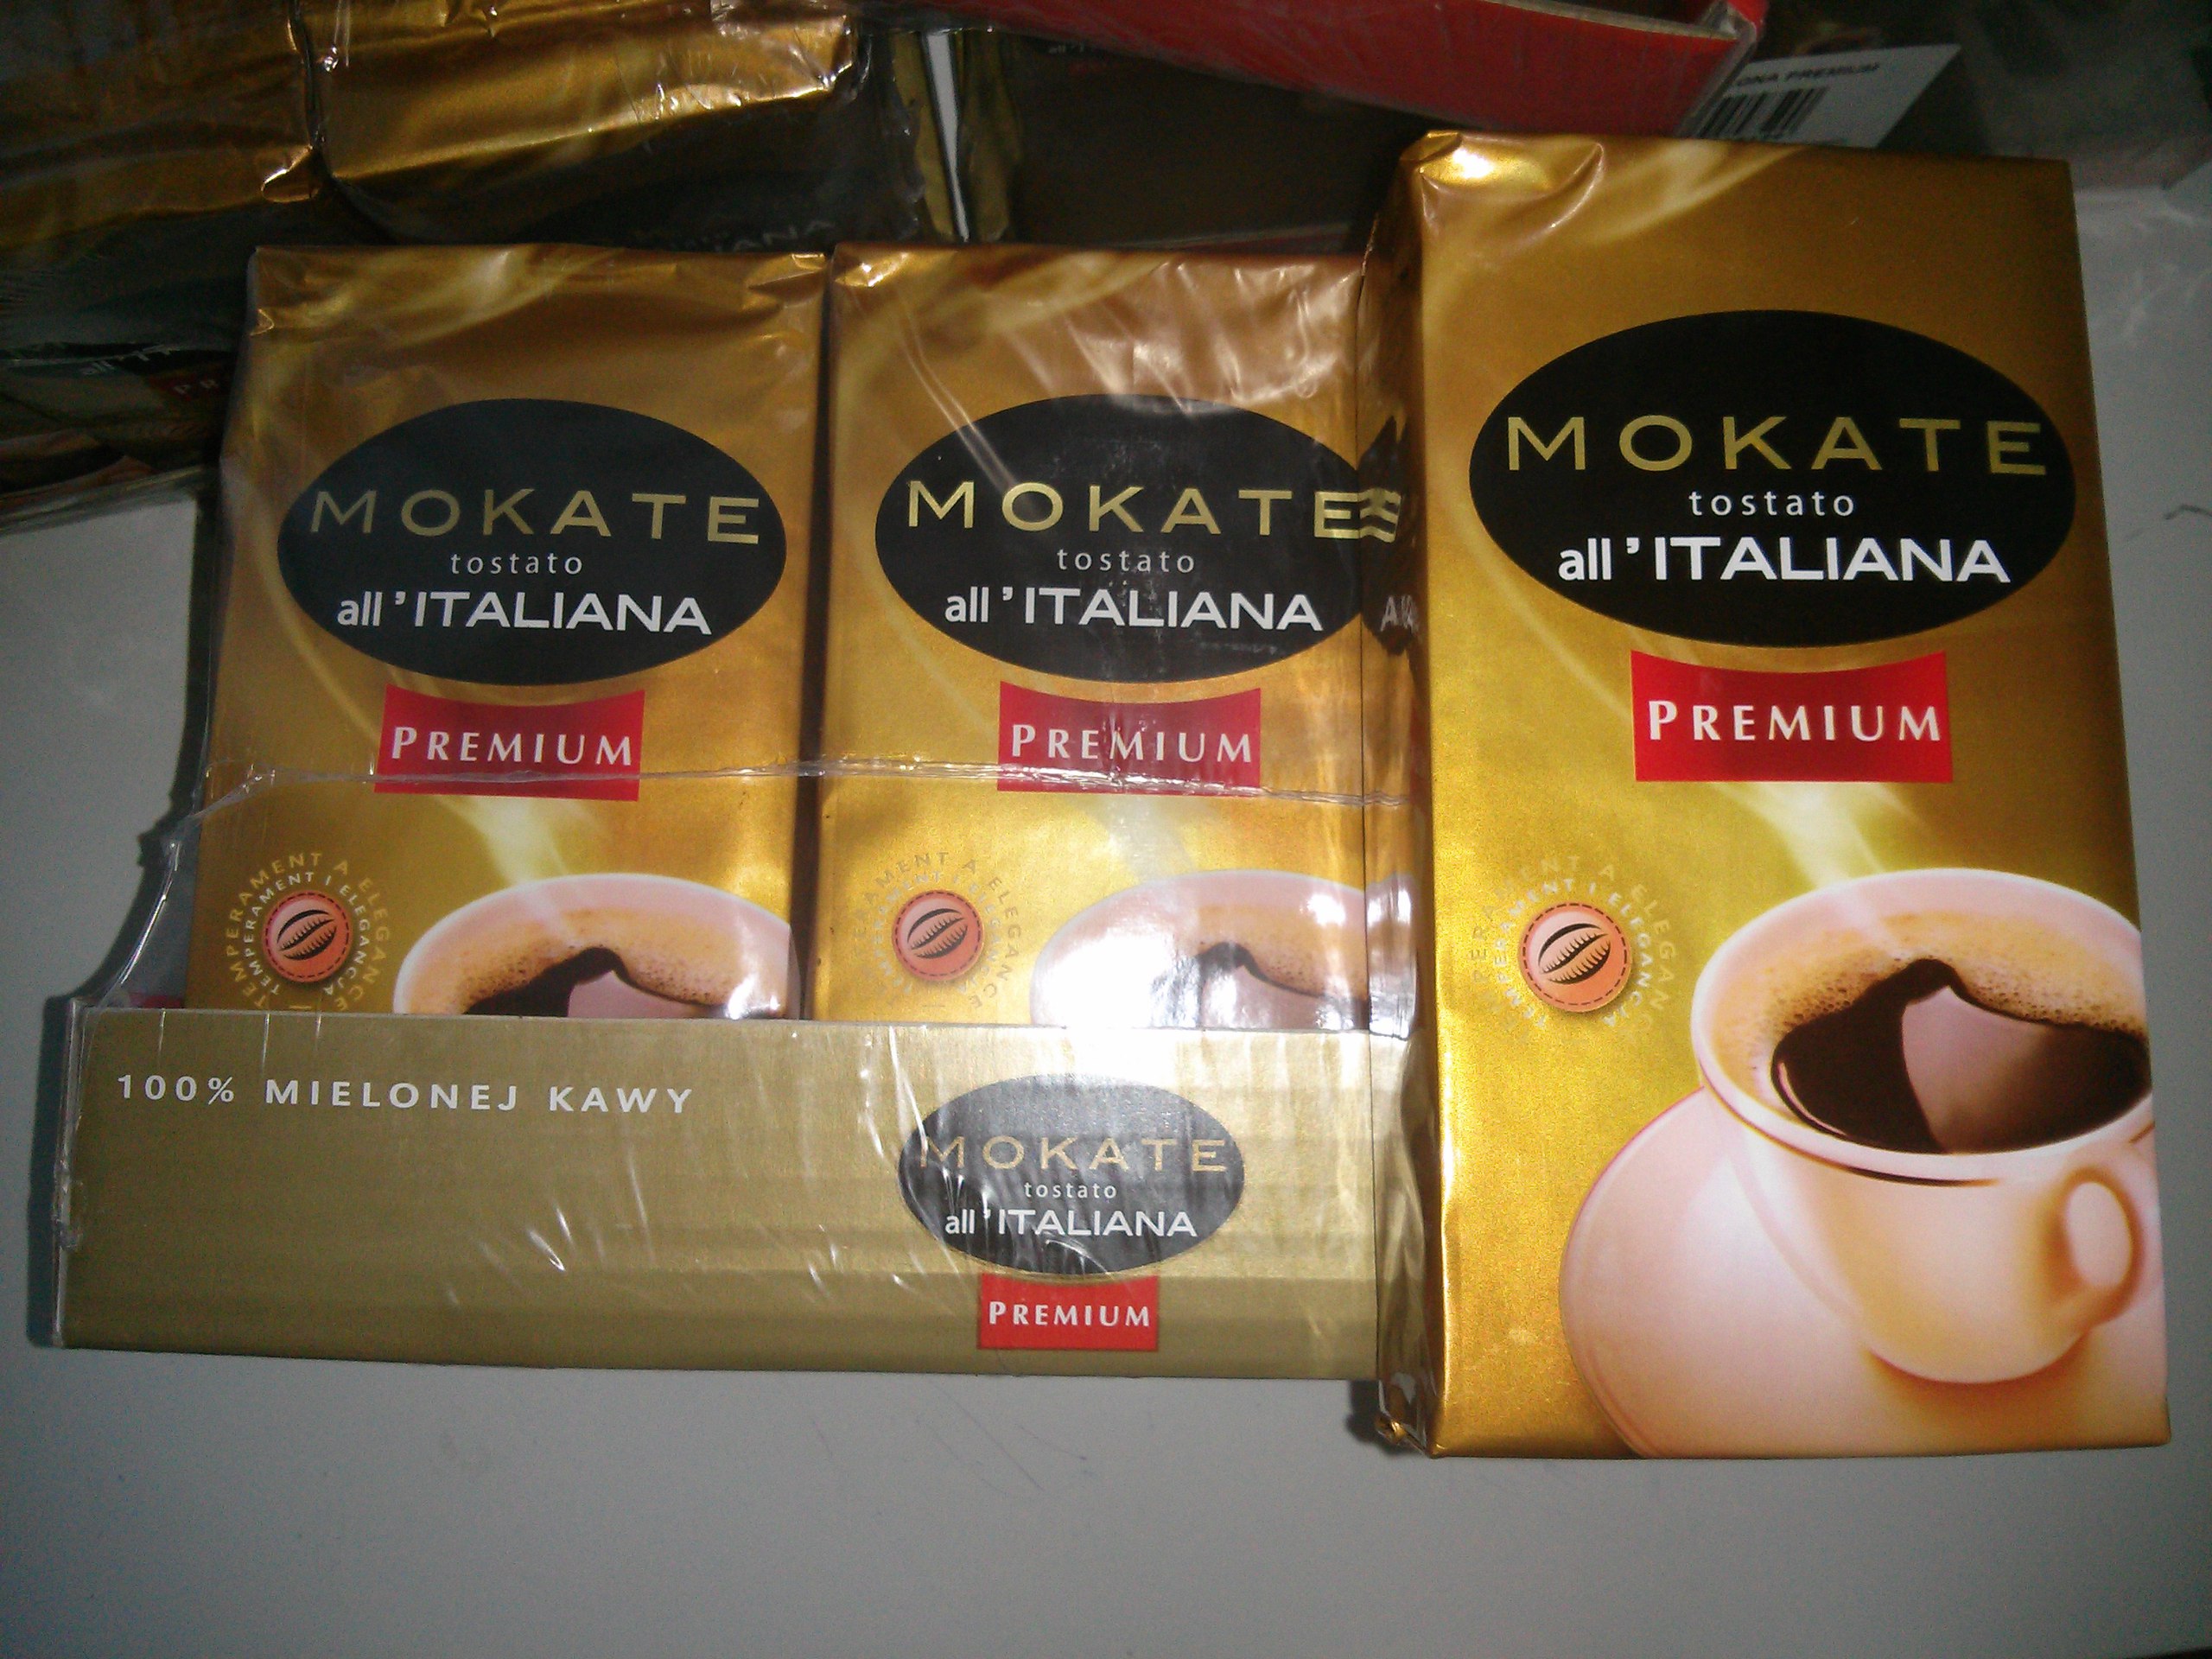   Mokate tostato all 'Italiana Premium 250 